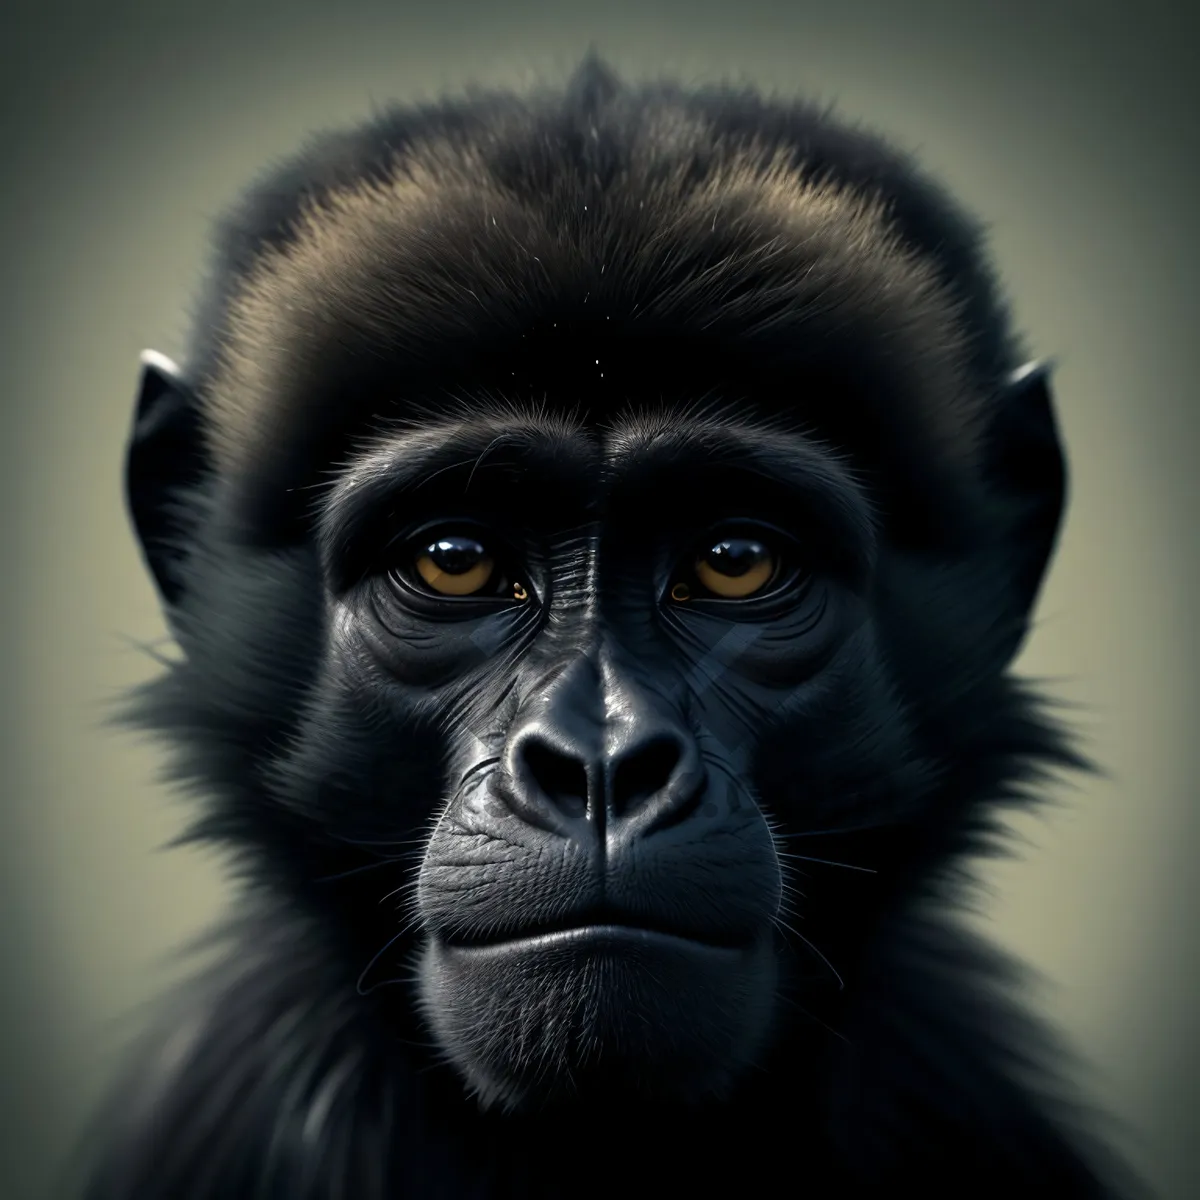 Picture of Adorable Baby Gorilla - Natural Primate Portrait